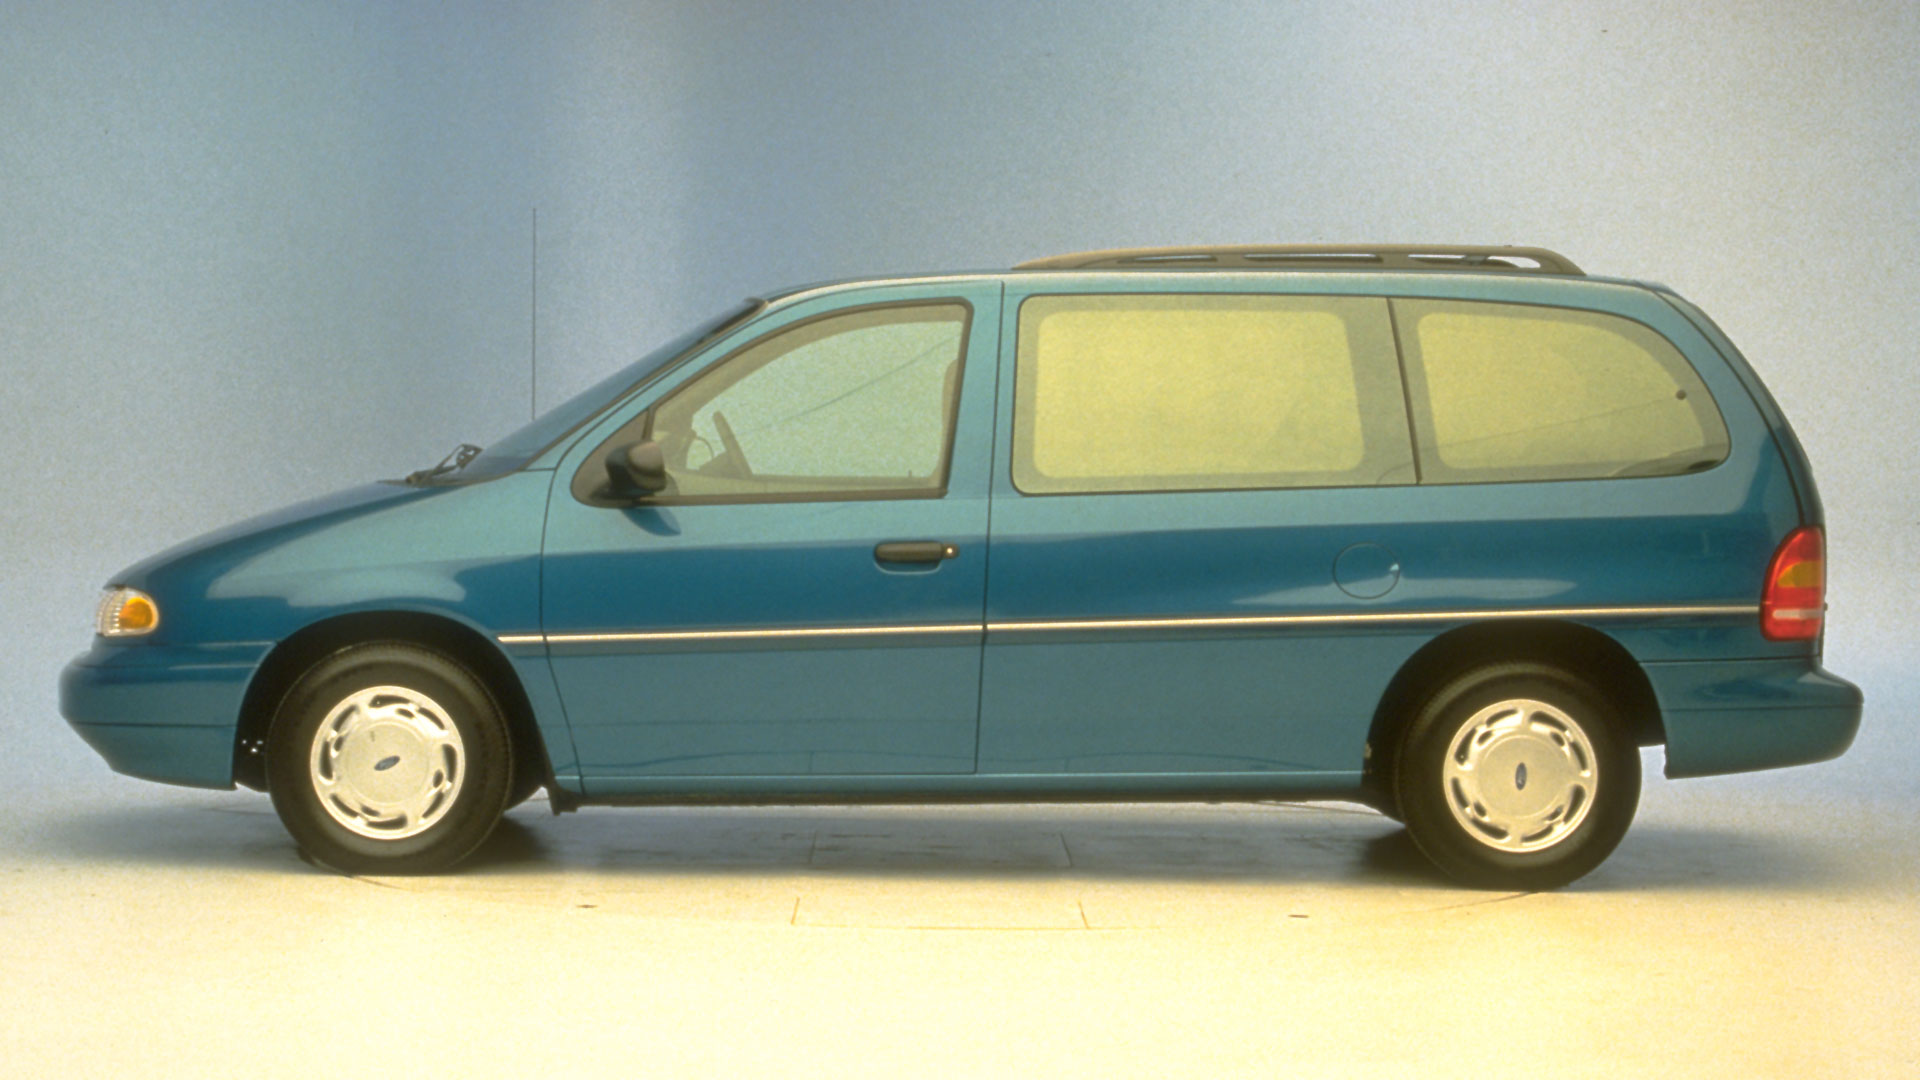 1996 ford van models